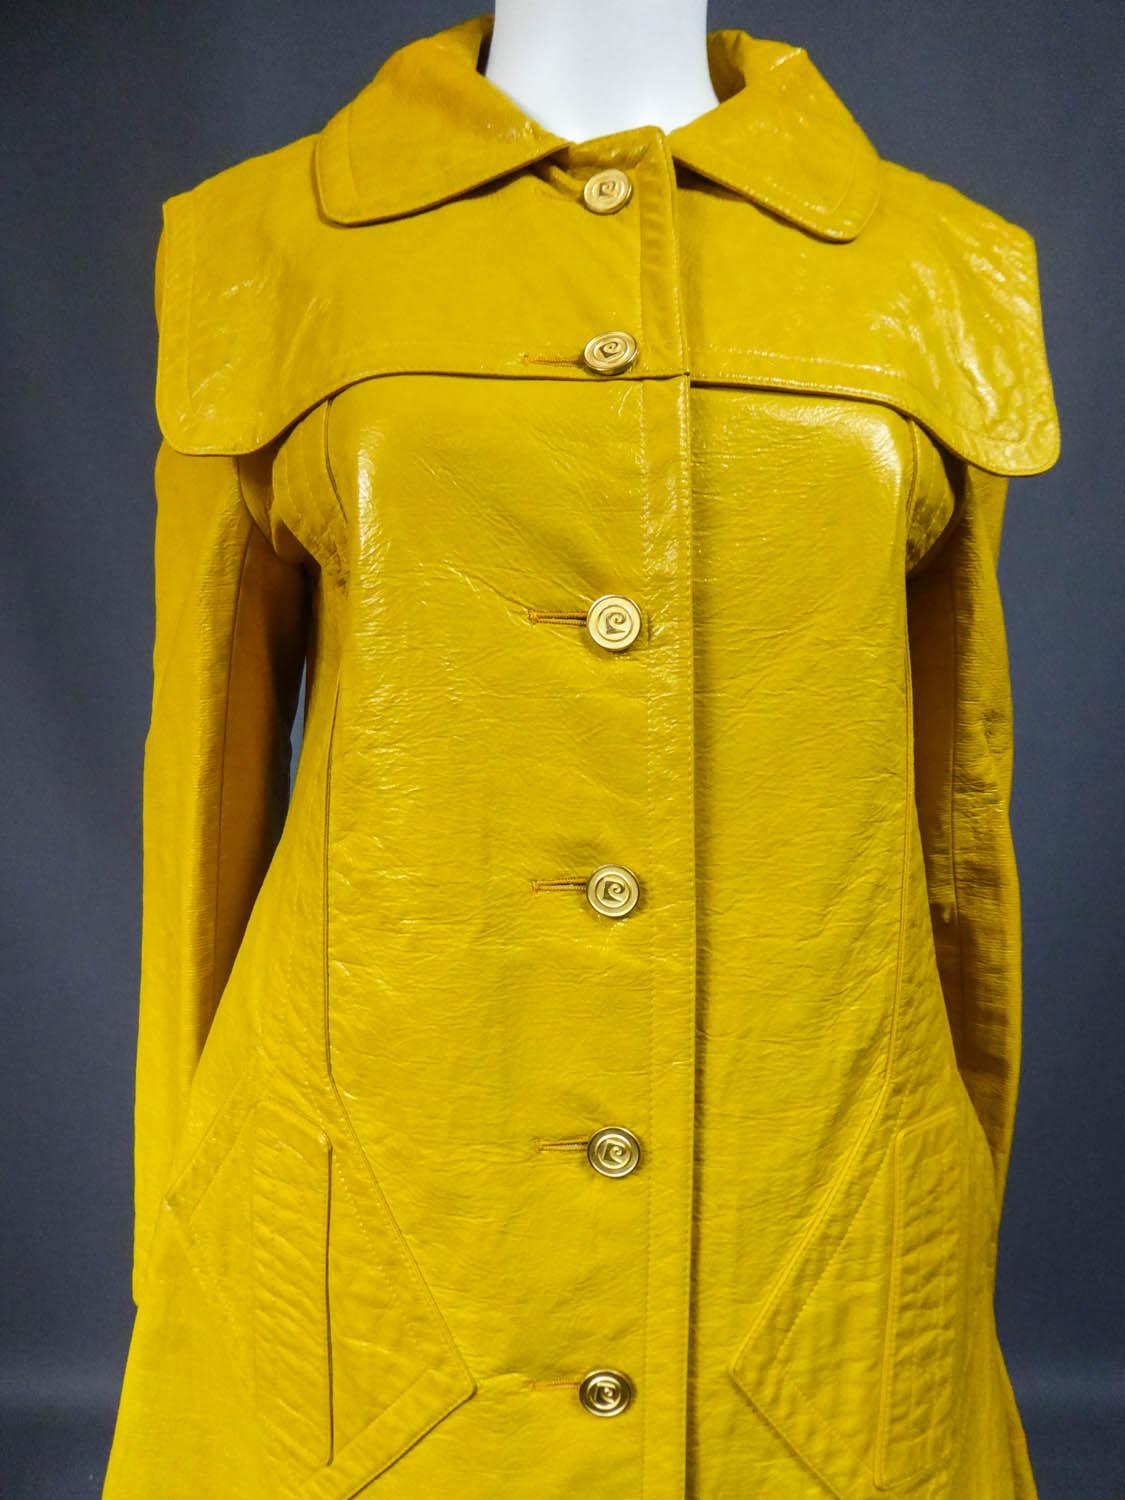 yellow vinyl coat